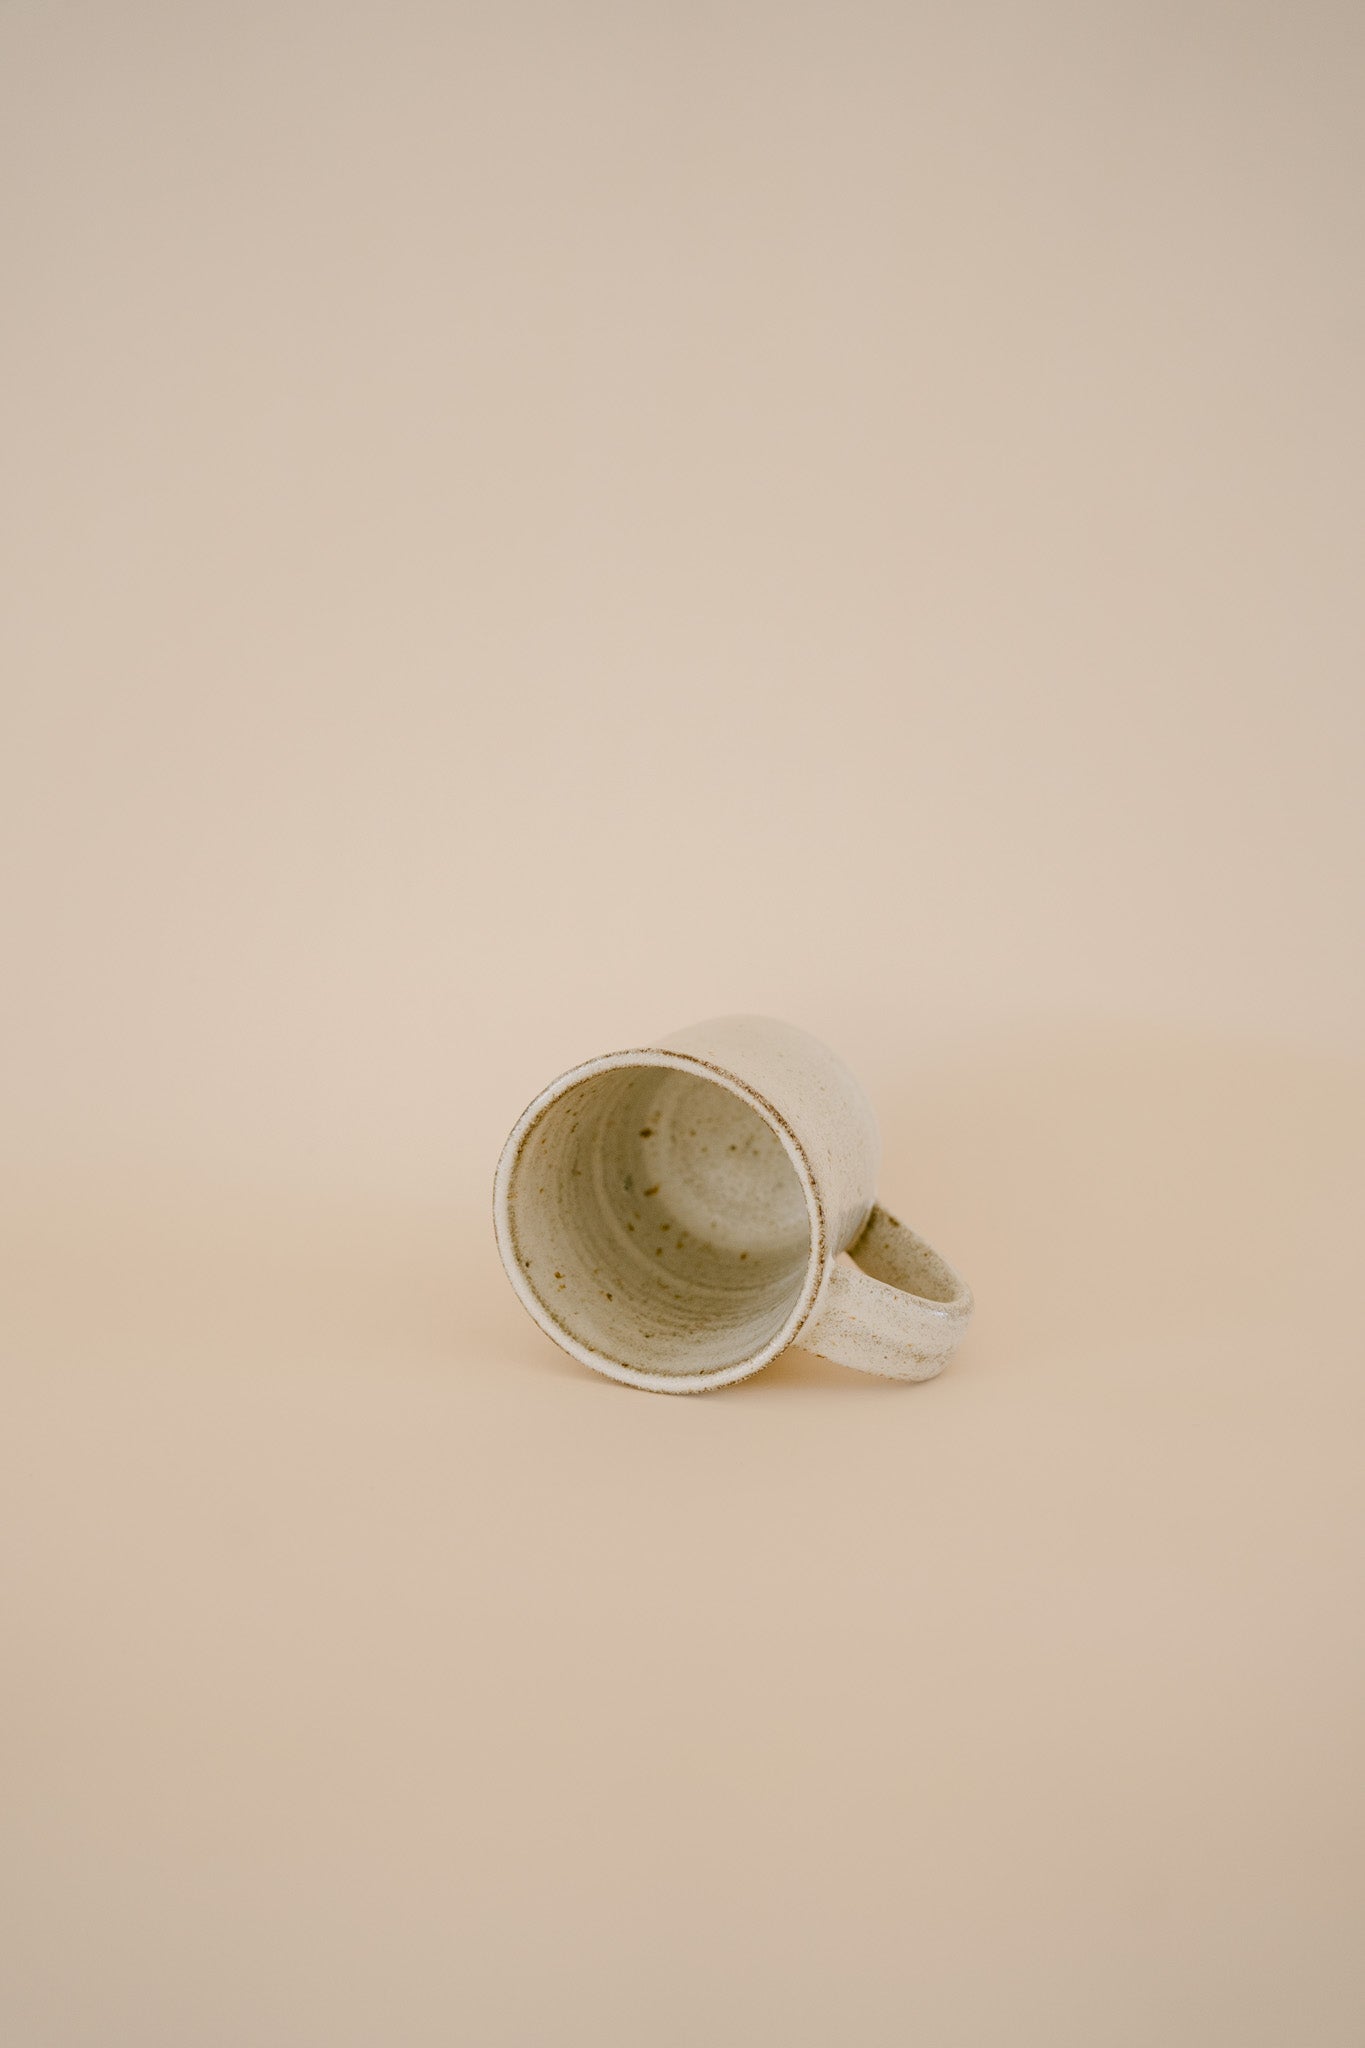 Off-white Diner Style Mug #1